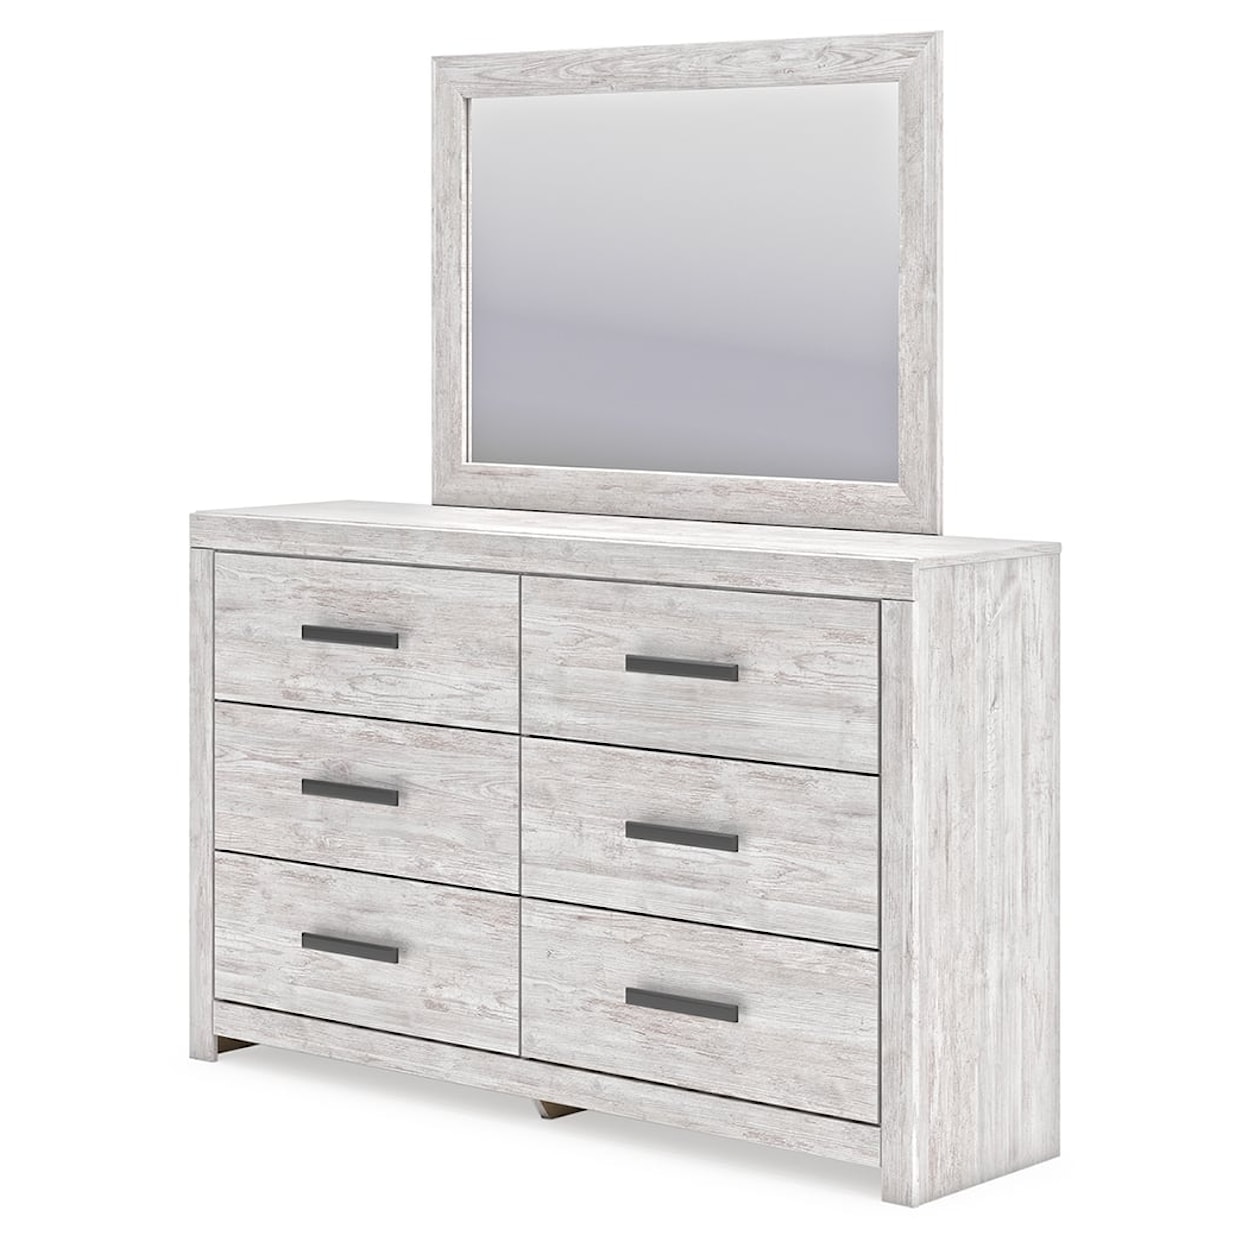 StyleLine Cayboni Dresser and Mirror